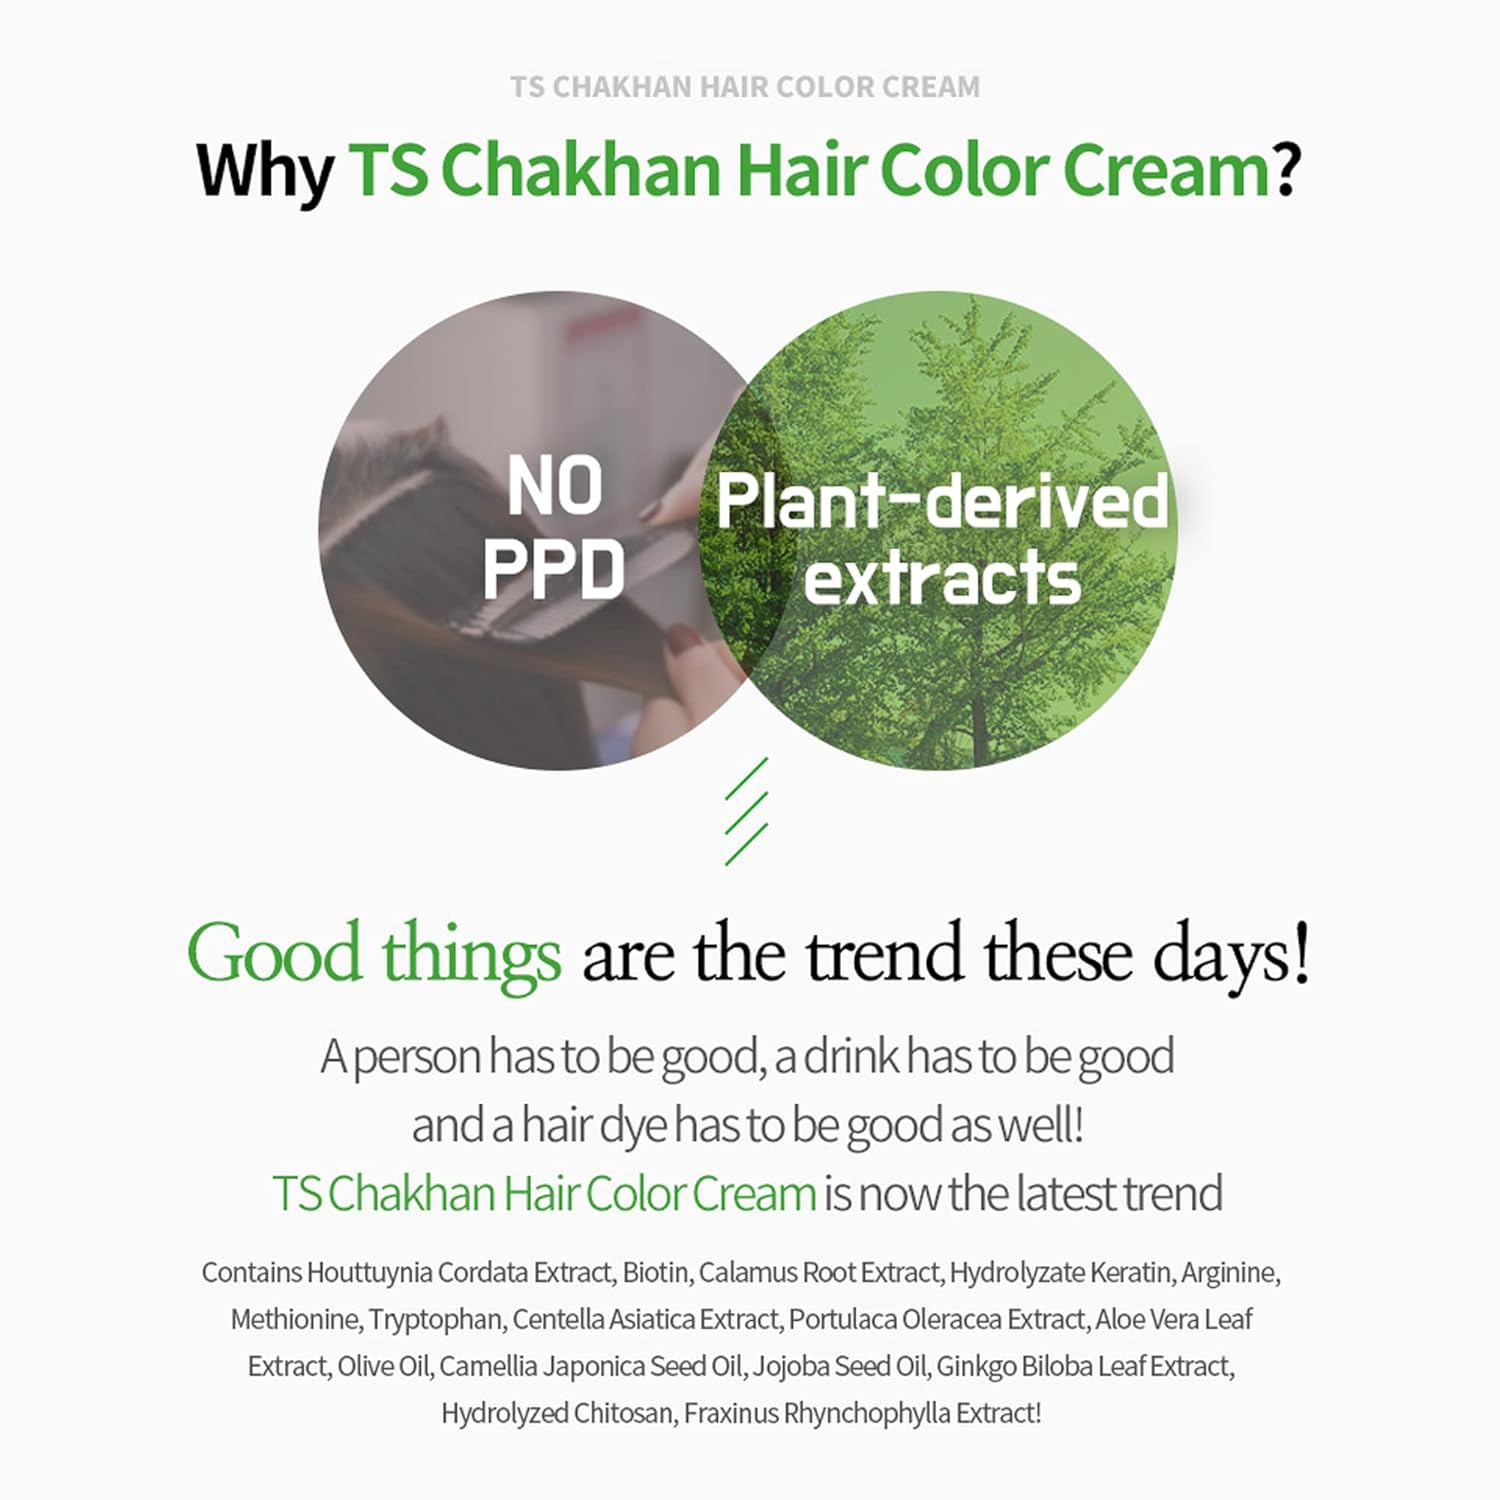 TS Chakhan Hair Color Cream to cover gray hair (5 colors) - KosBeauty